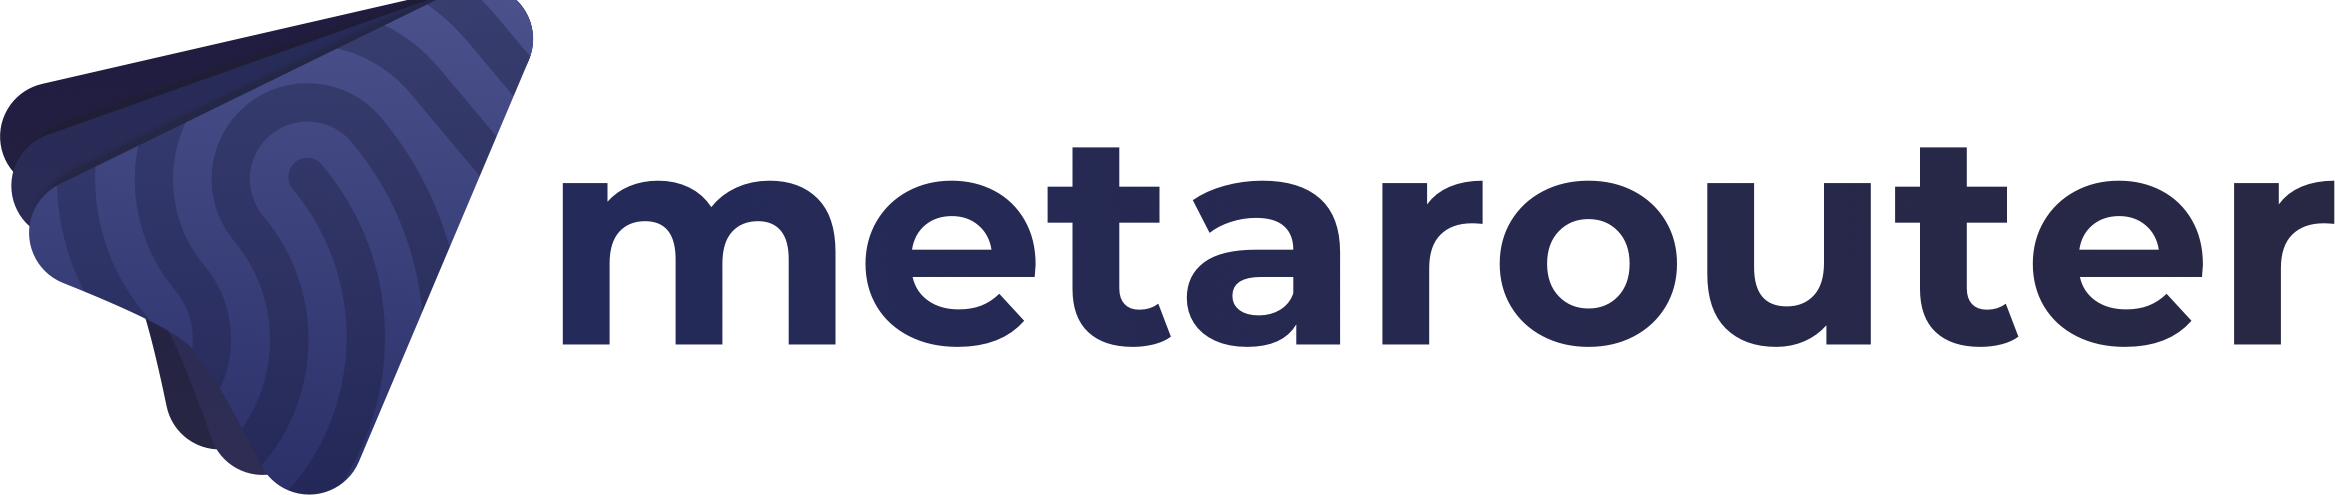 metarouter logo